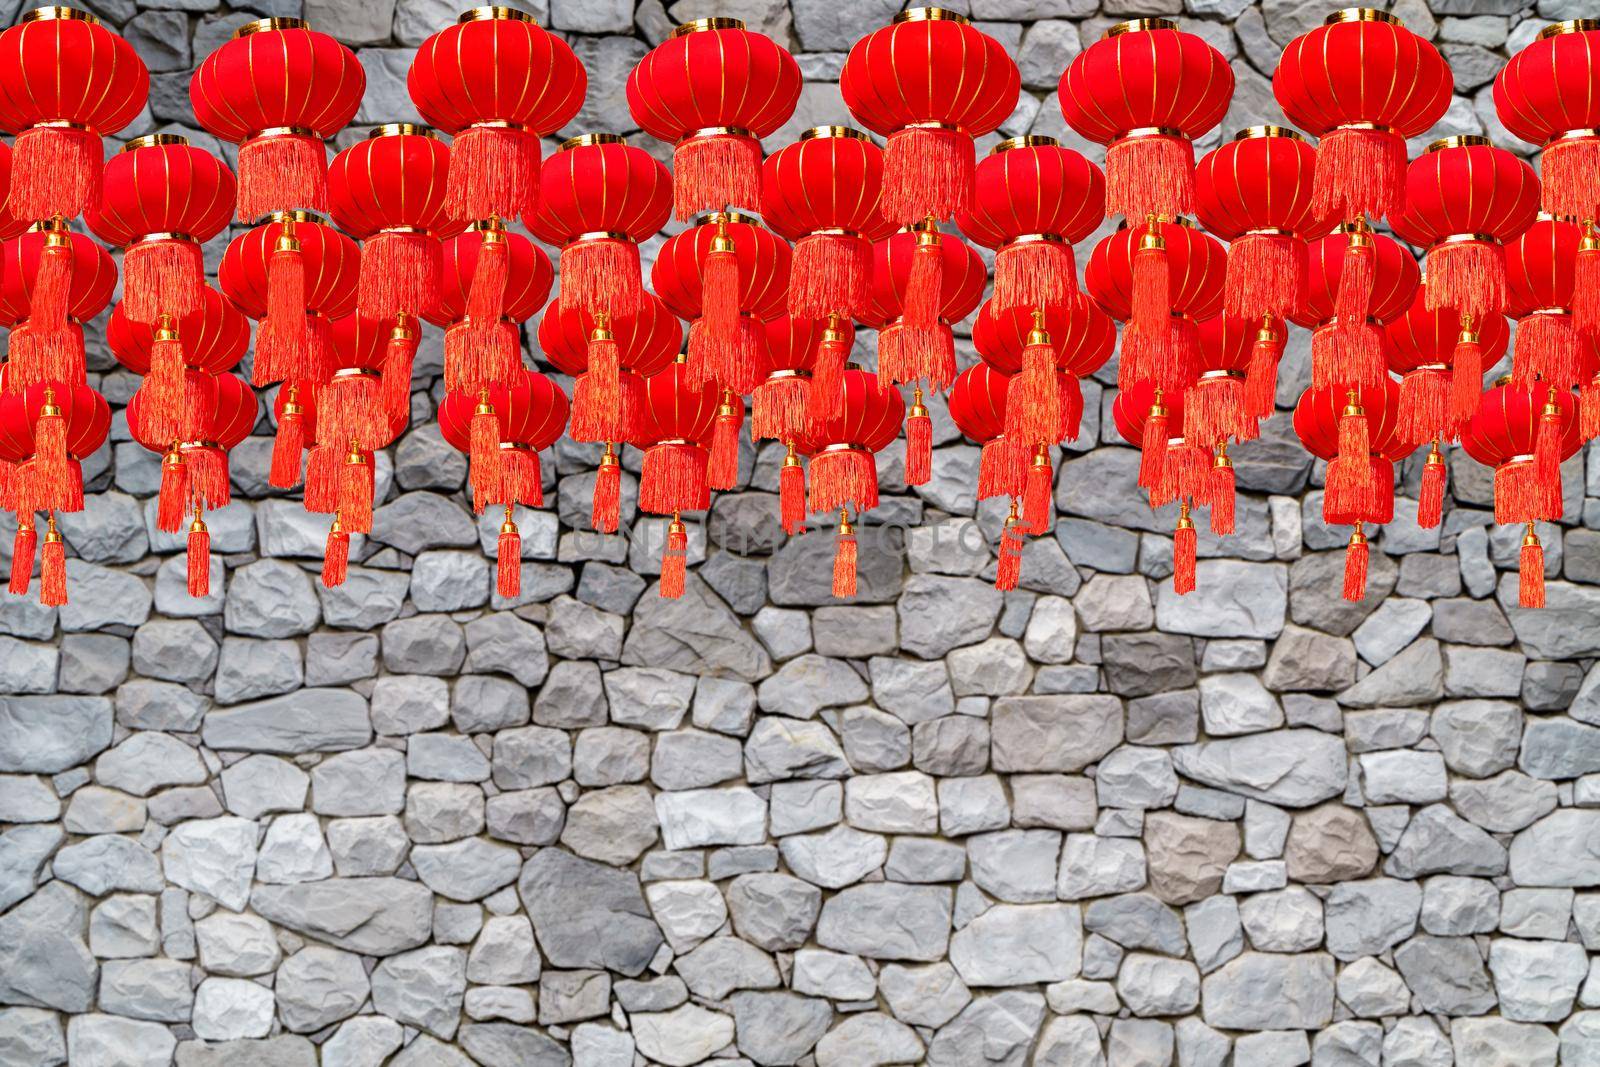 Chinese new year lanterns for celebration hanging on street.